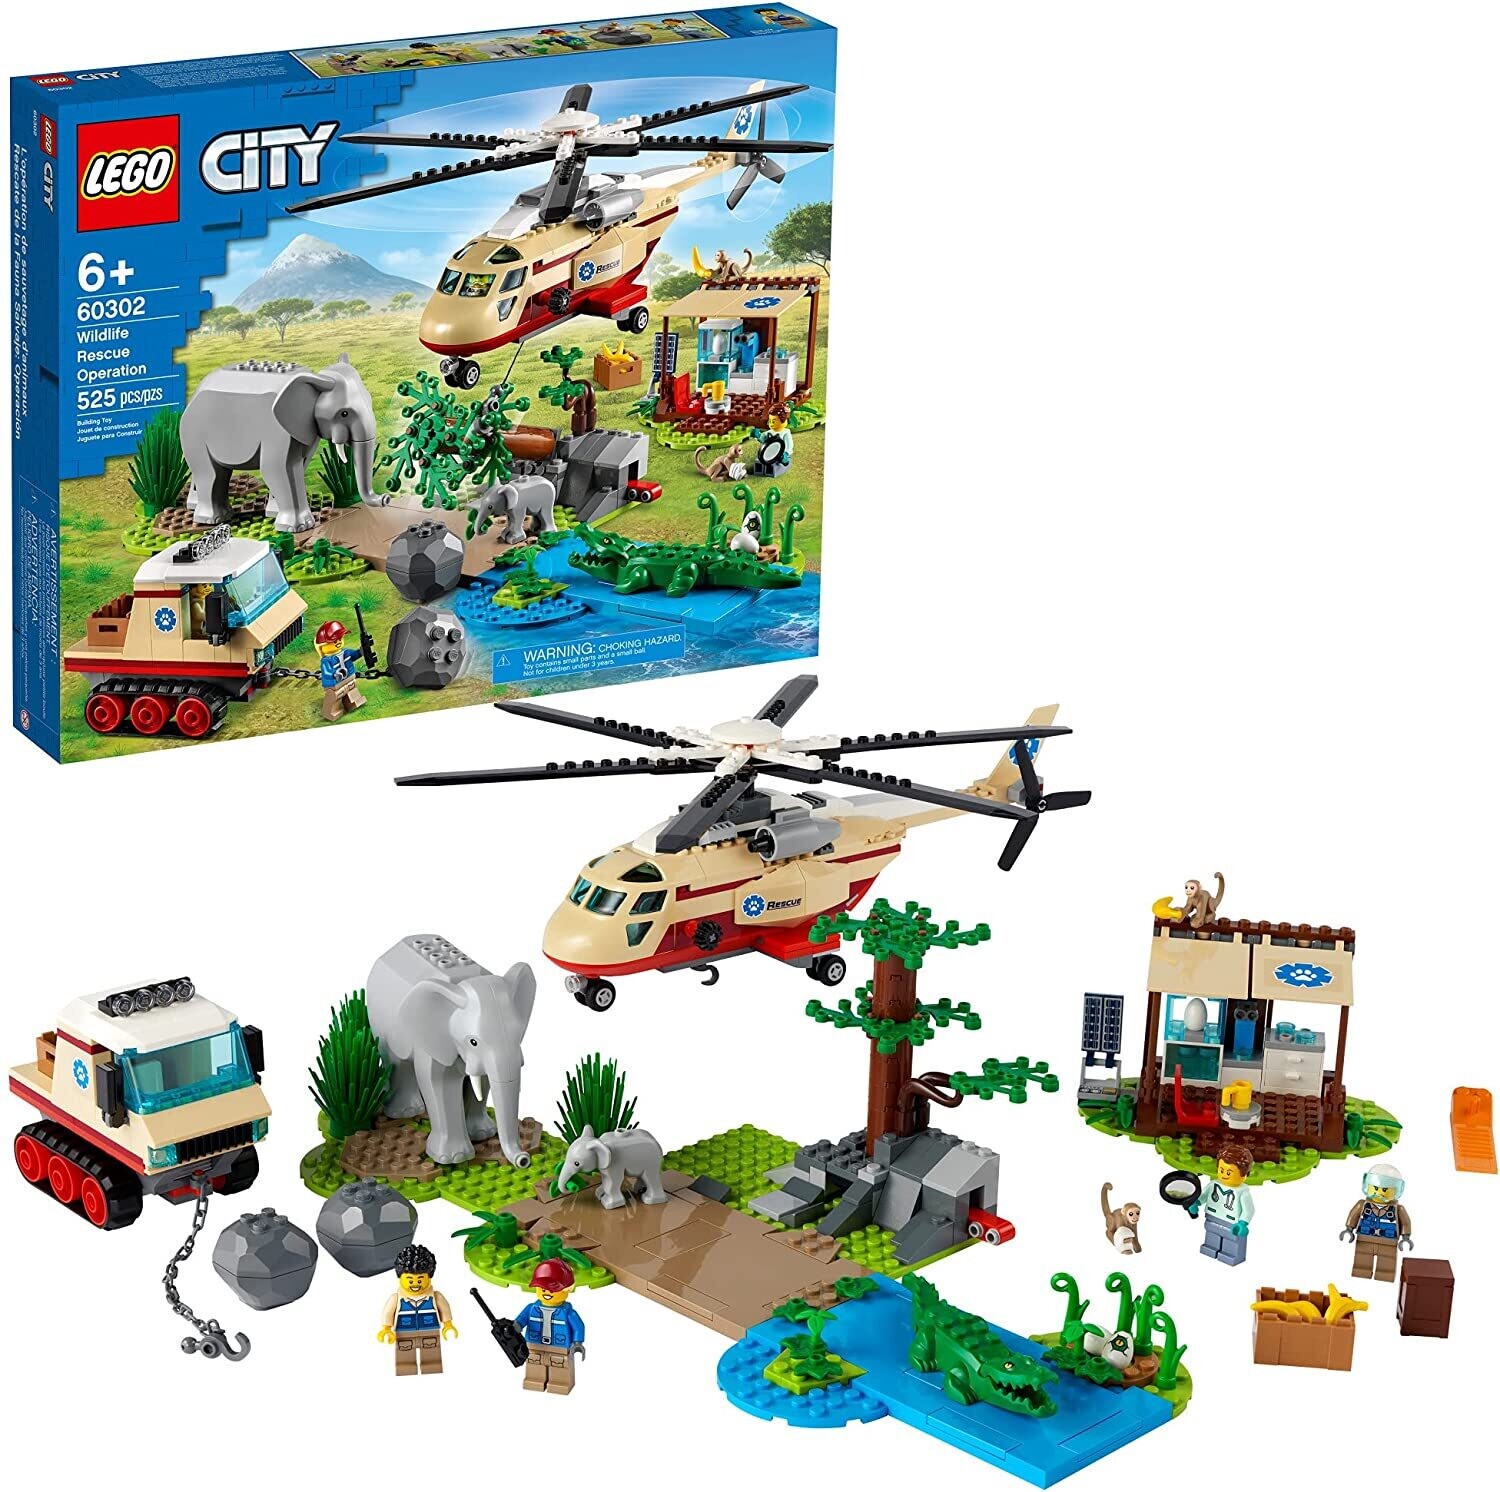 Lego City 60302 Wildlife Rescue Operation